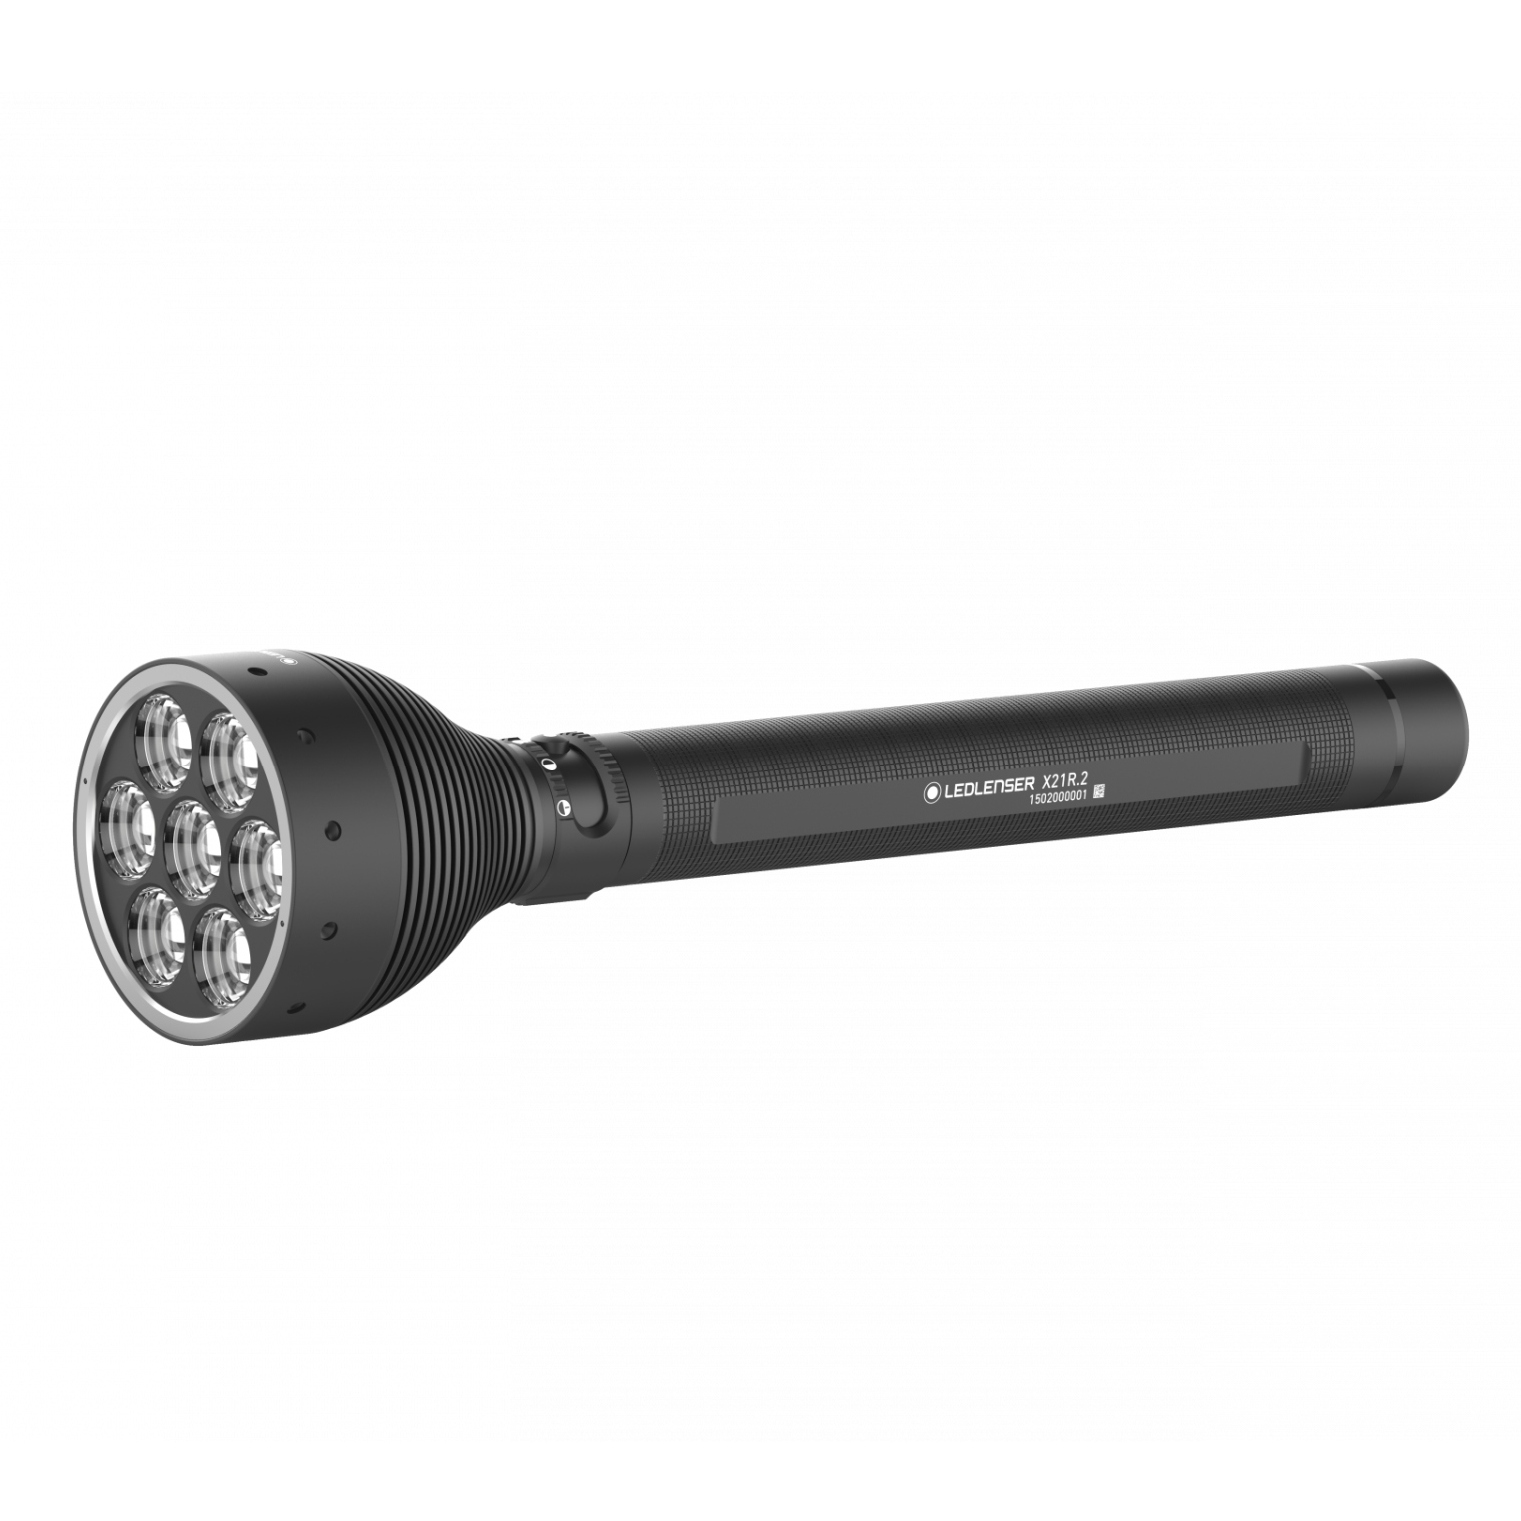 Productfoto van LEDLENSER X21R Flashlight - Black